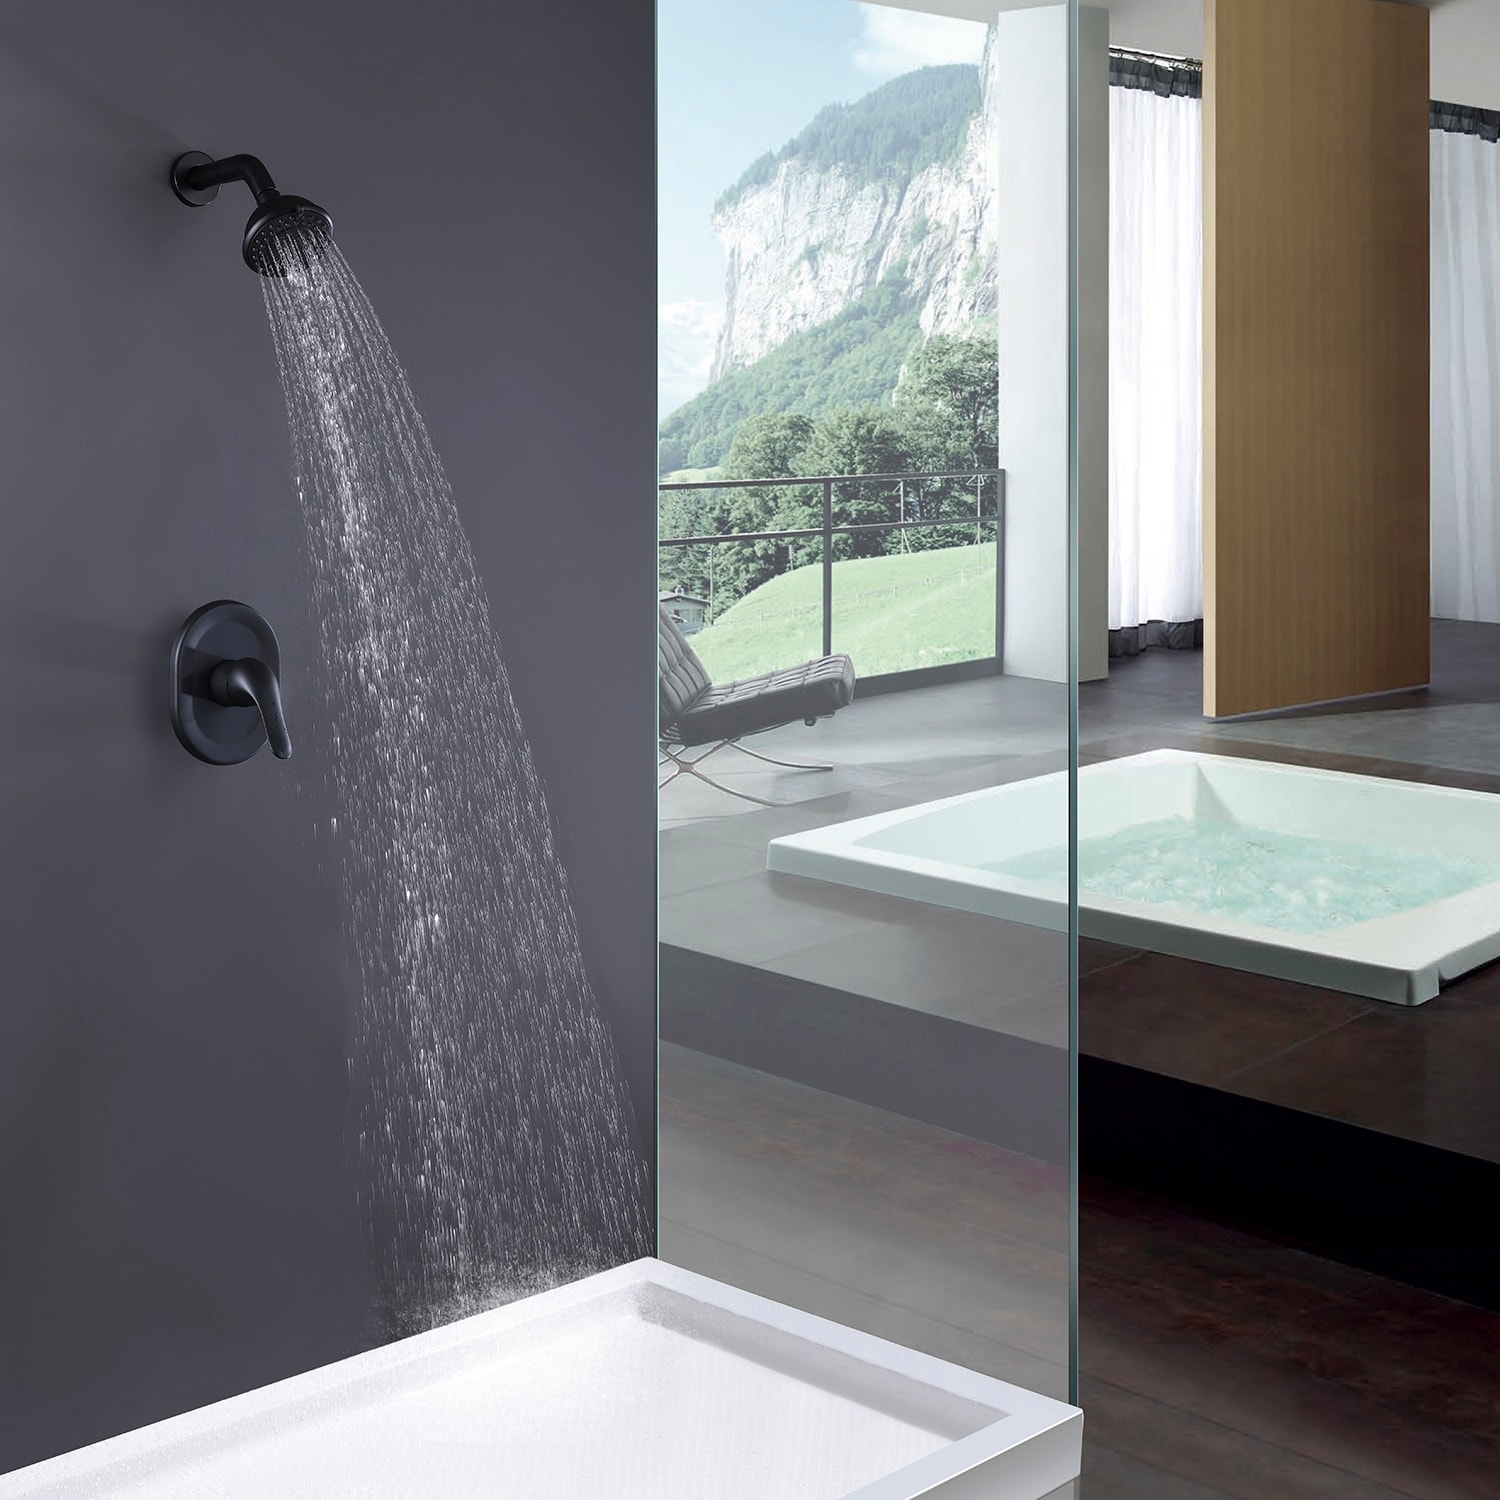 Wall Mount Shower Faucet Set With Valve Complete Shower System Black Inch  Shower Head Single Handle Bathroom Shower Trim Kit Bed Bath  Beyond  35459113